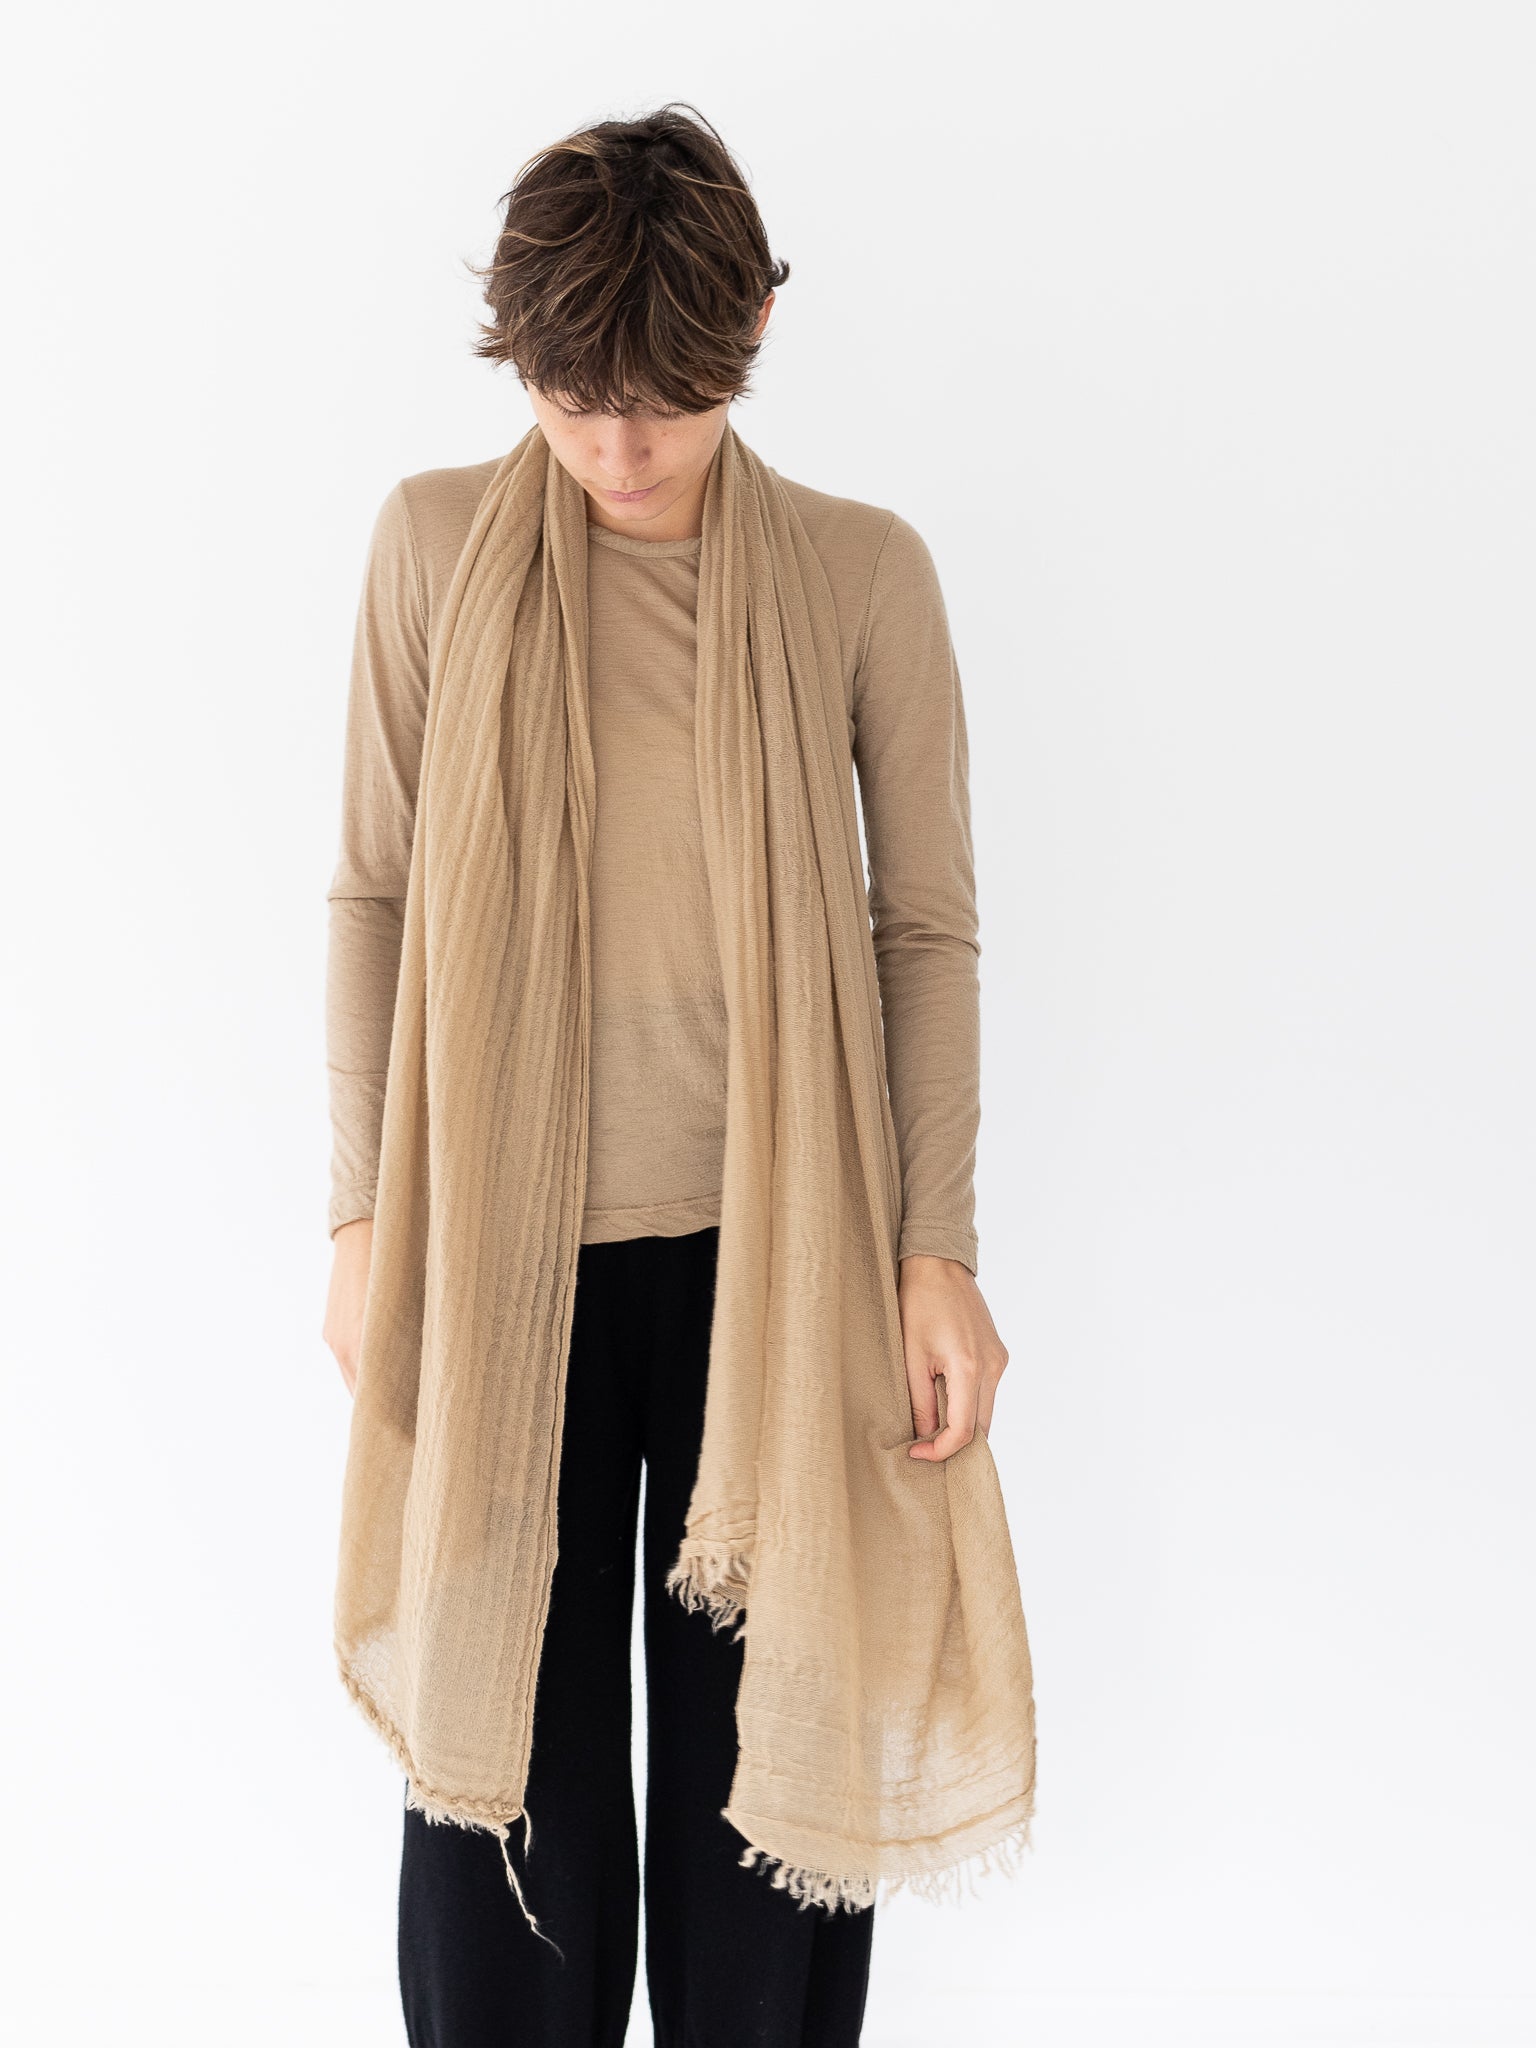 Cloth - @isabellaarichardson wears the Wool Cashmere